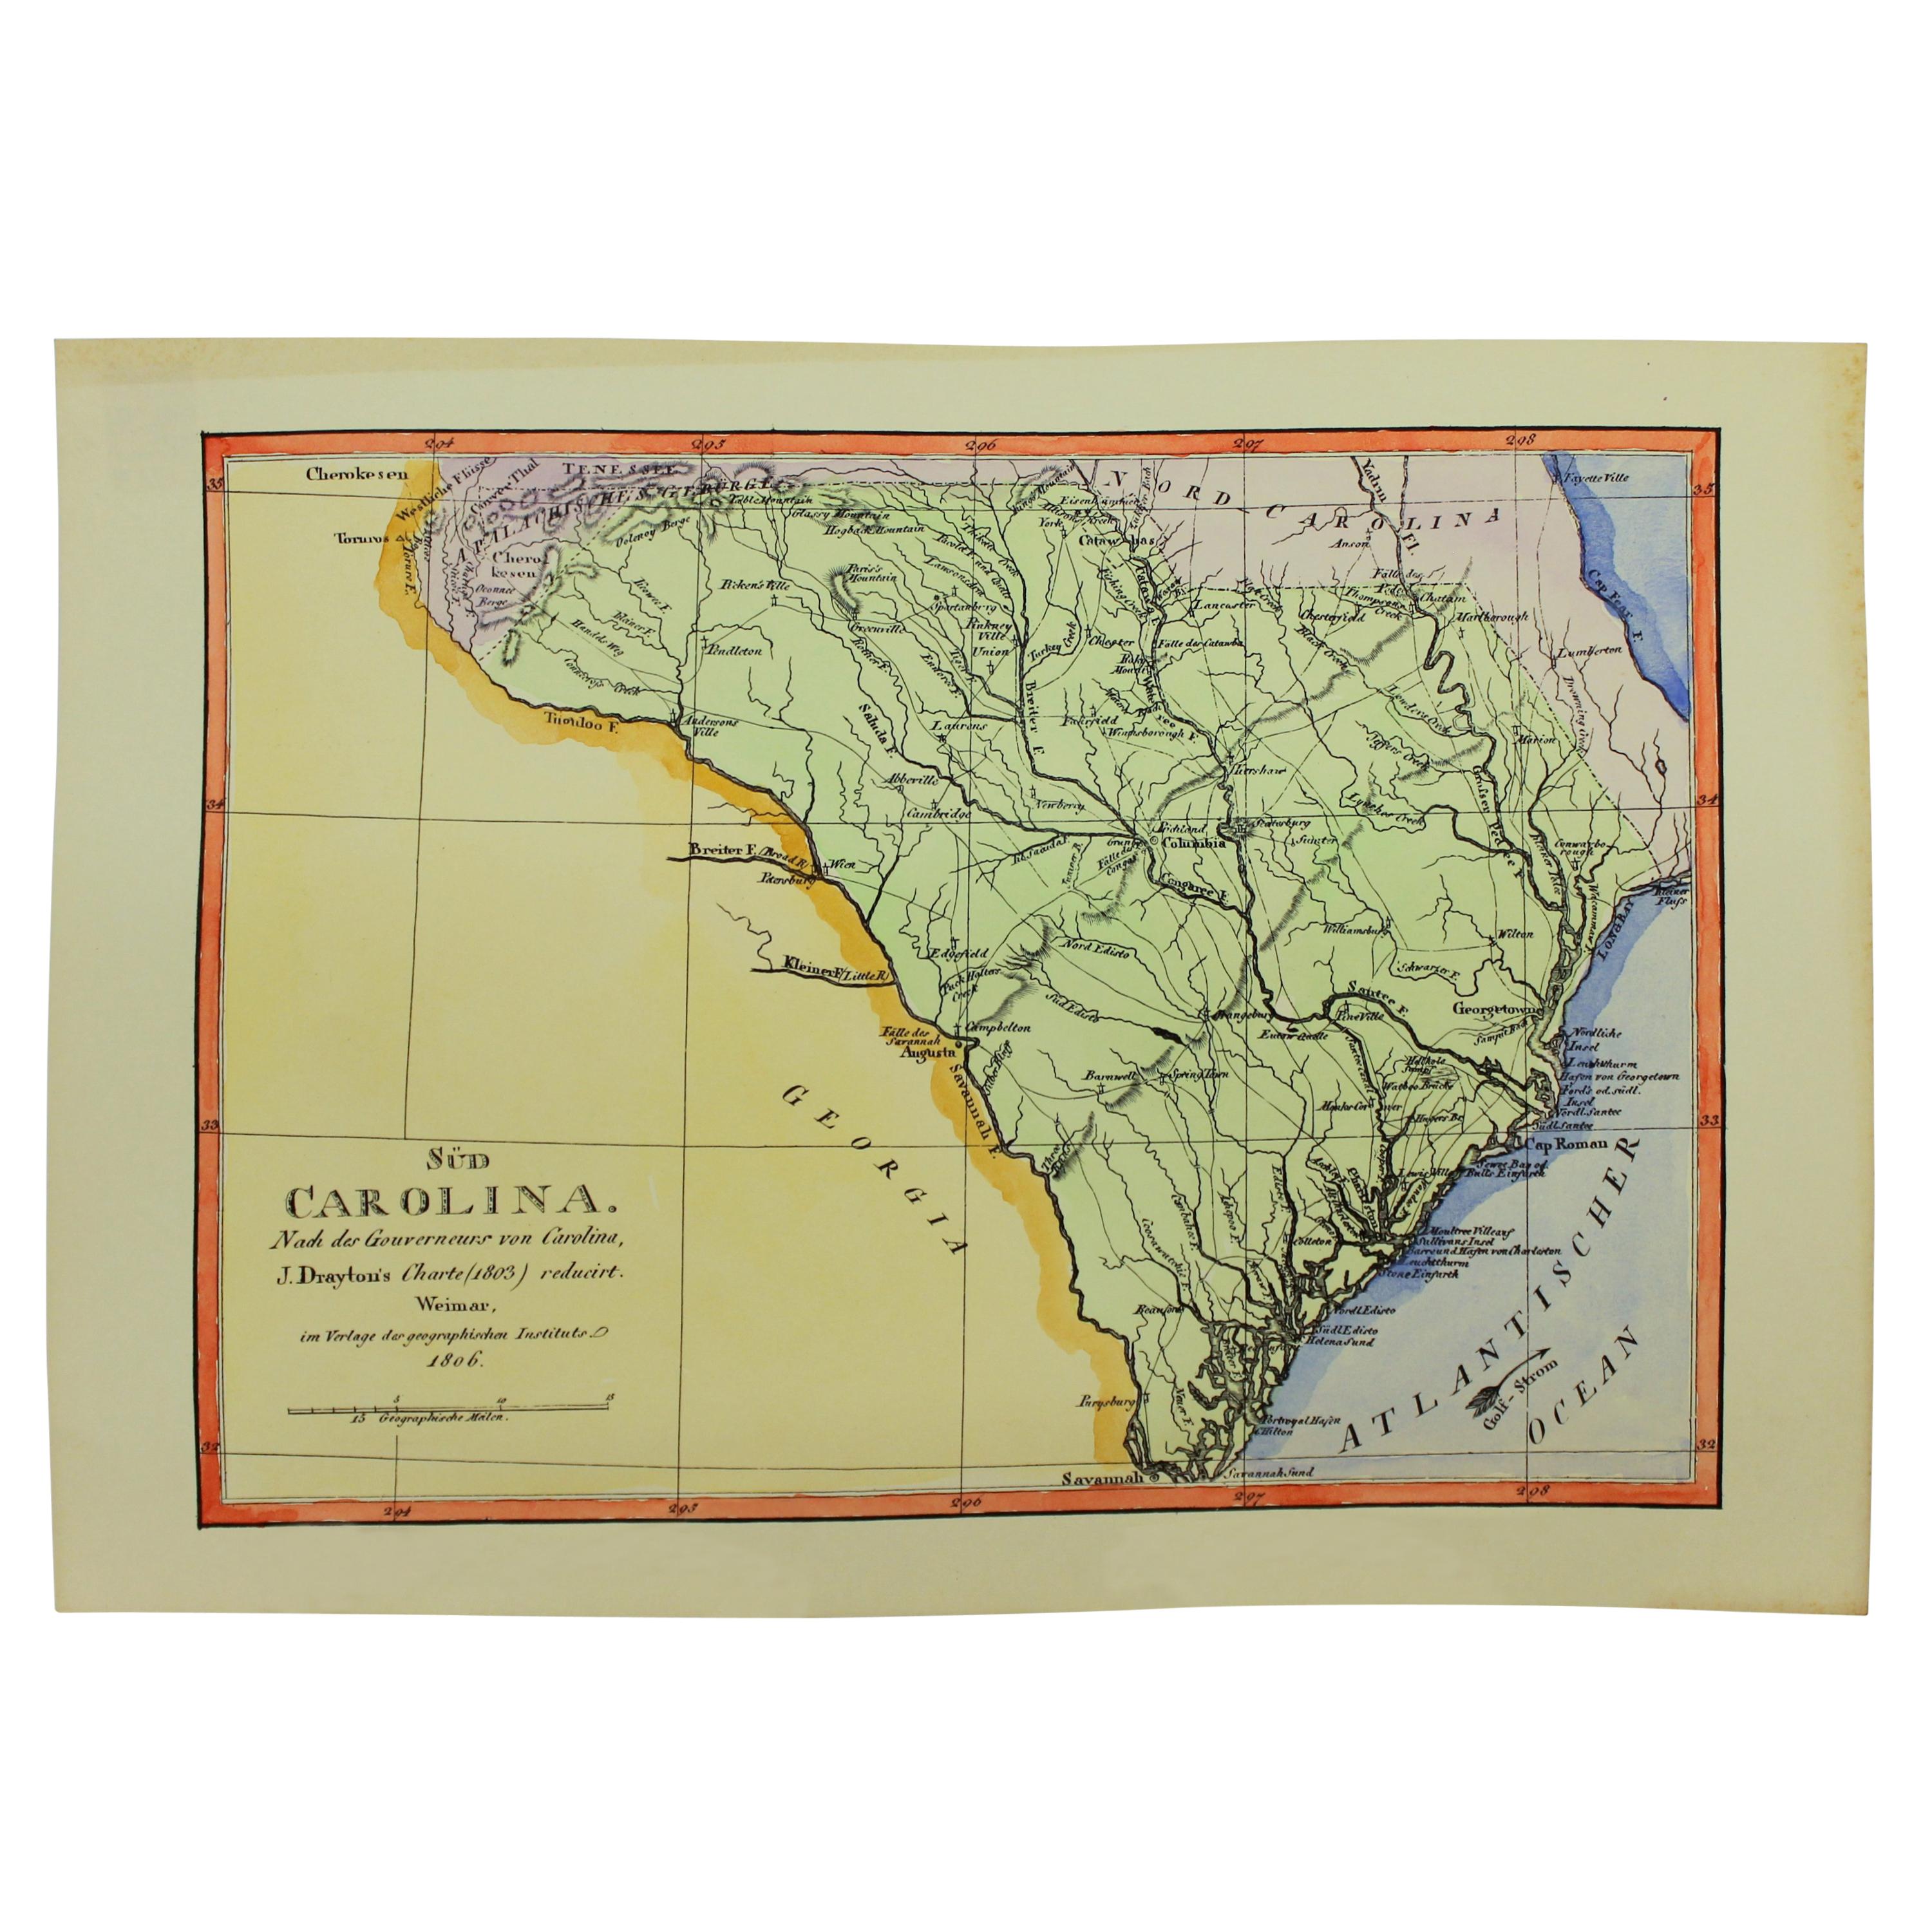 Alte handkolorierte Reproduktion der Karte von South Carolina, J. Drayton